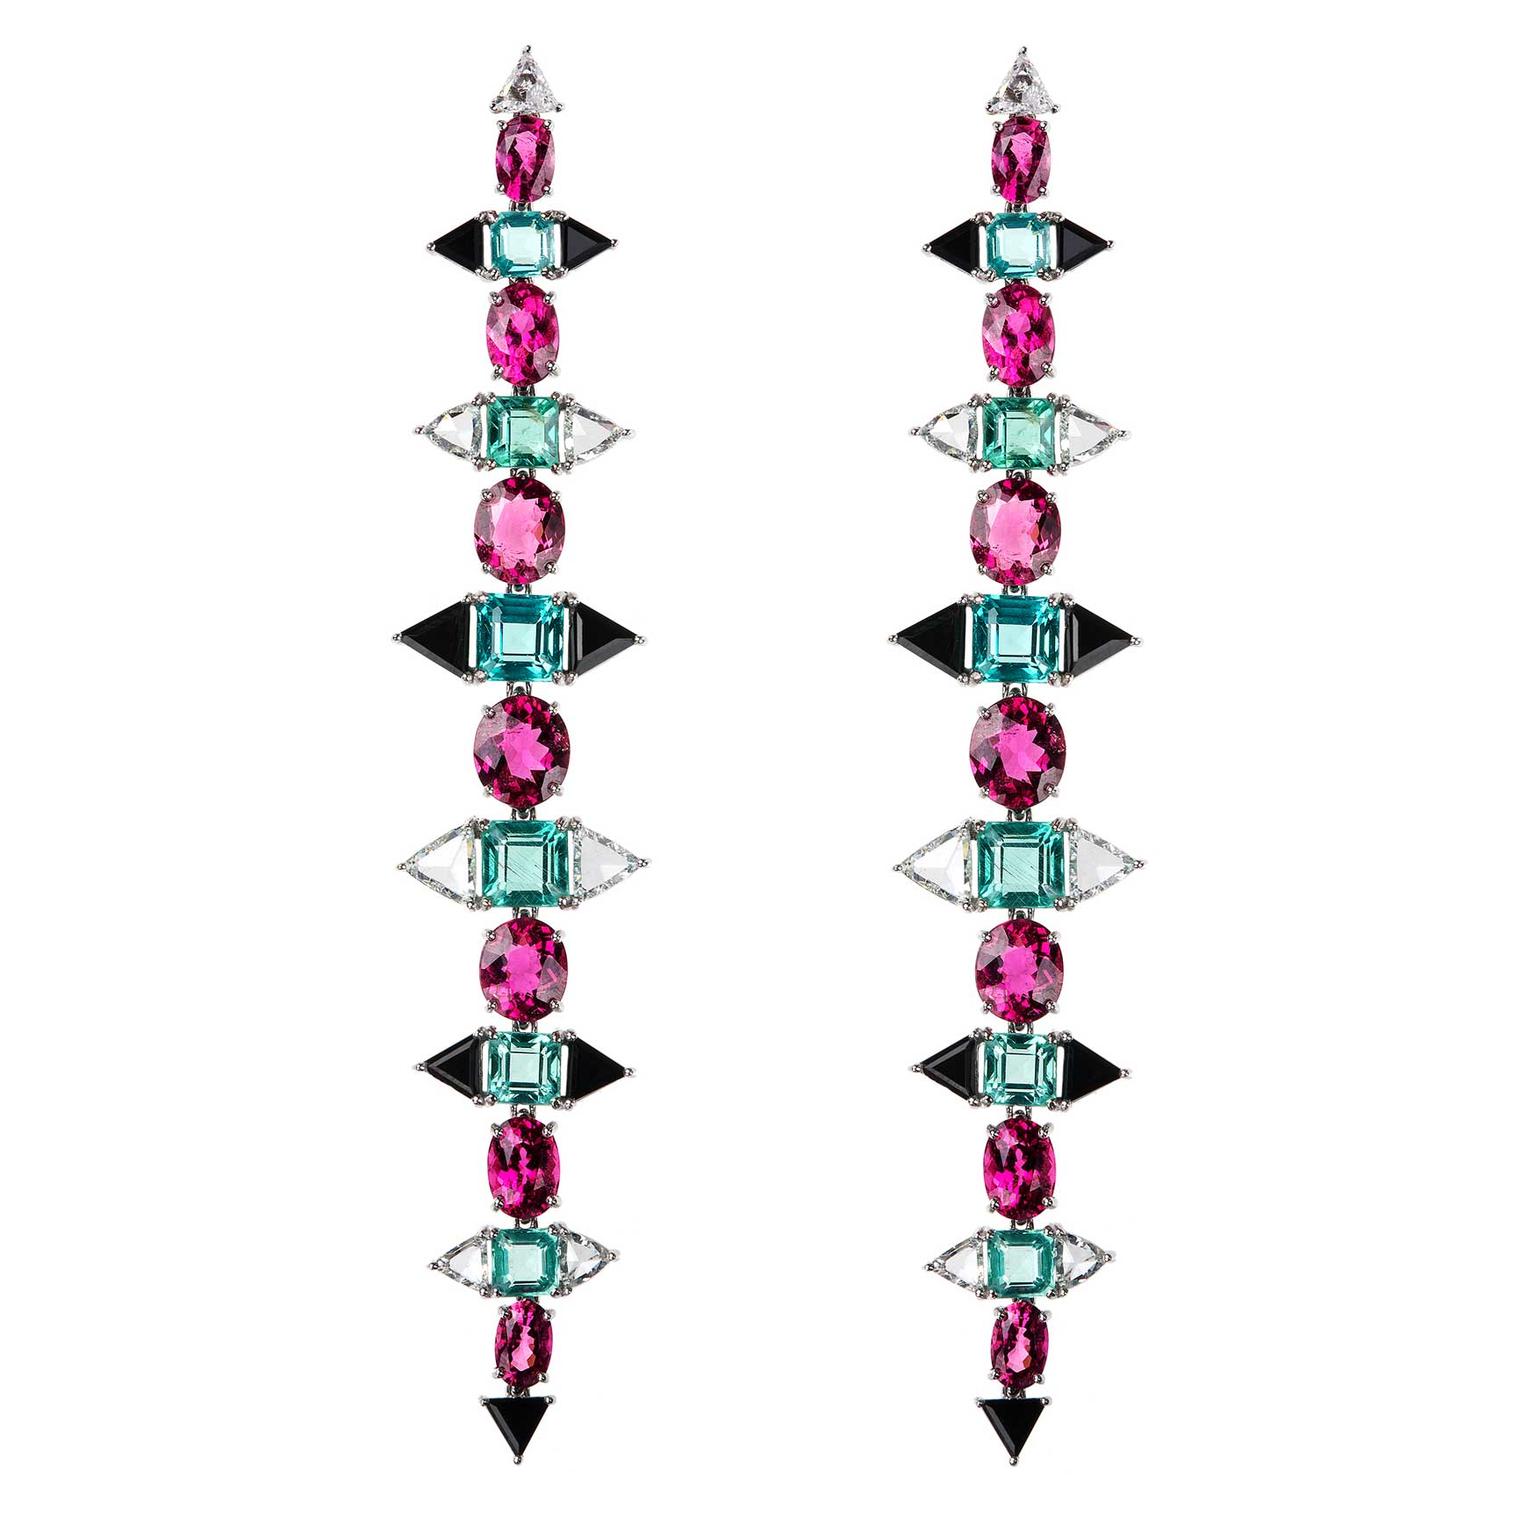 Nikos Koulis Eden collection earrings with-rose-cut diamonds, apatites, rubellites and onyx